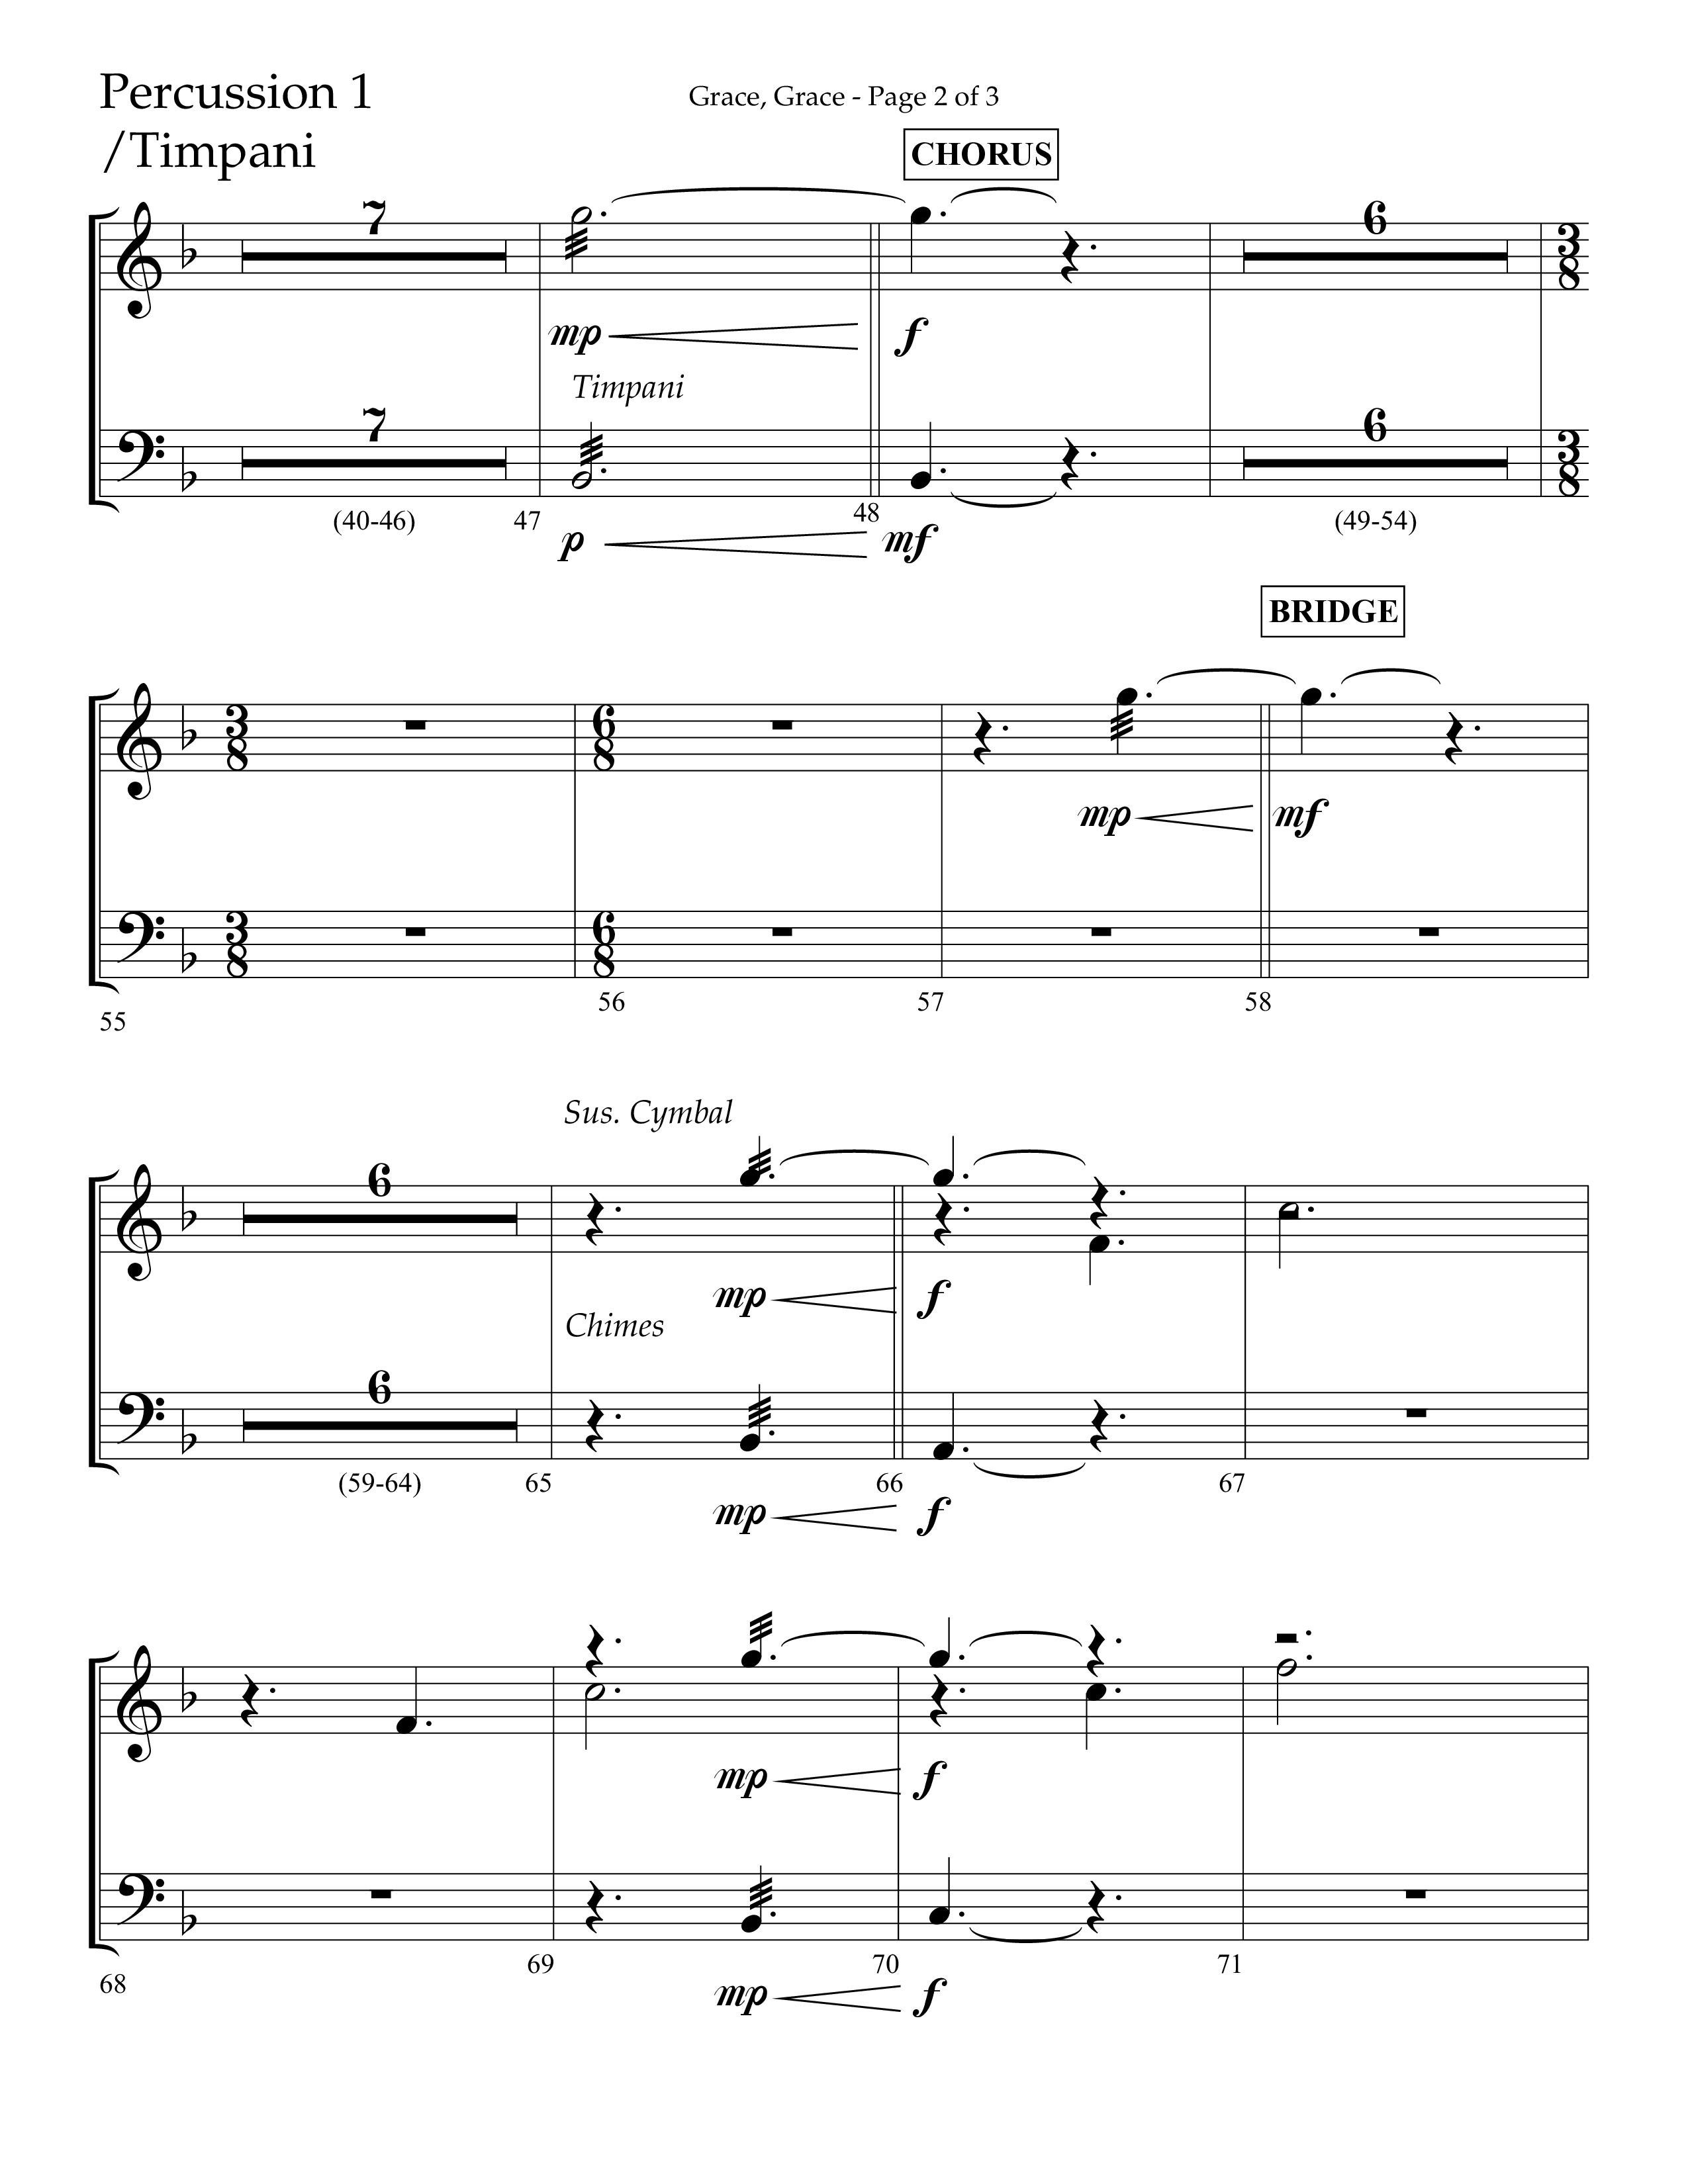 Grace Grace (Choral Anthem SATB) Percussion (Lifeway Choral / Arr. John Bolin / Arr. Don Koch / Arr. Eric Belvin / Orch. Daniel Semsen)